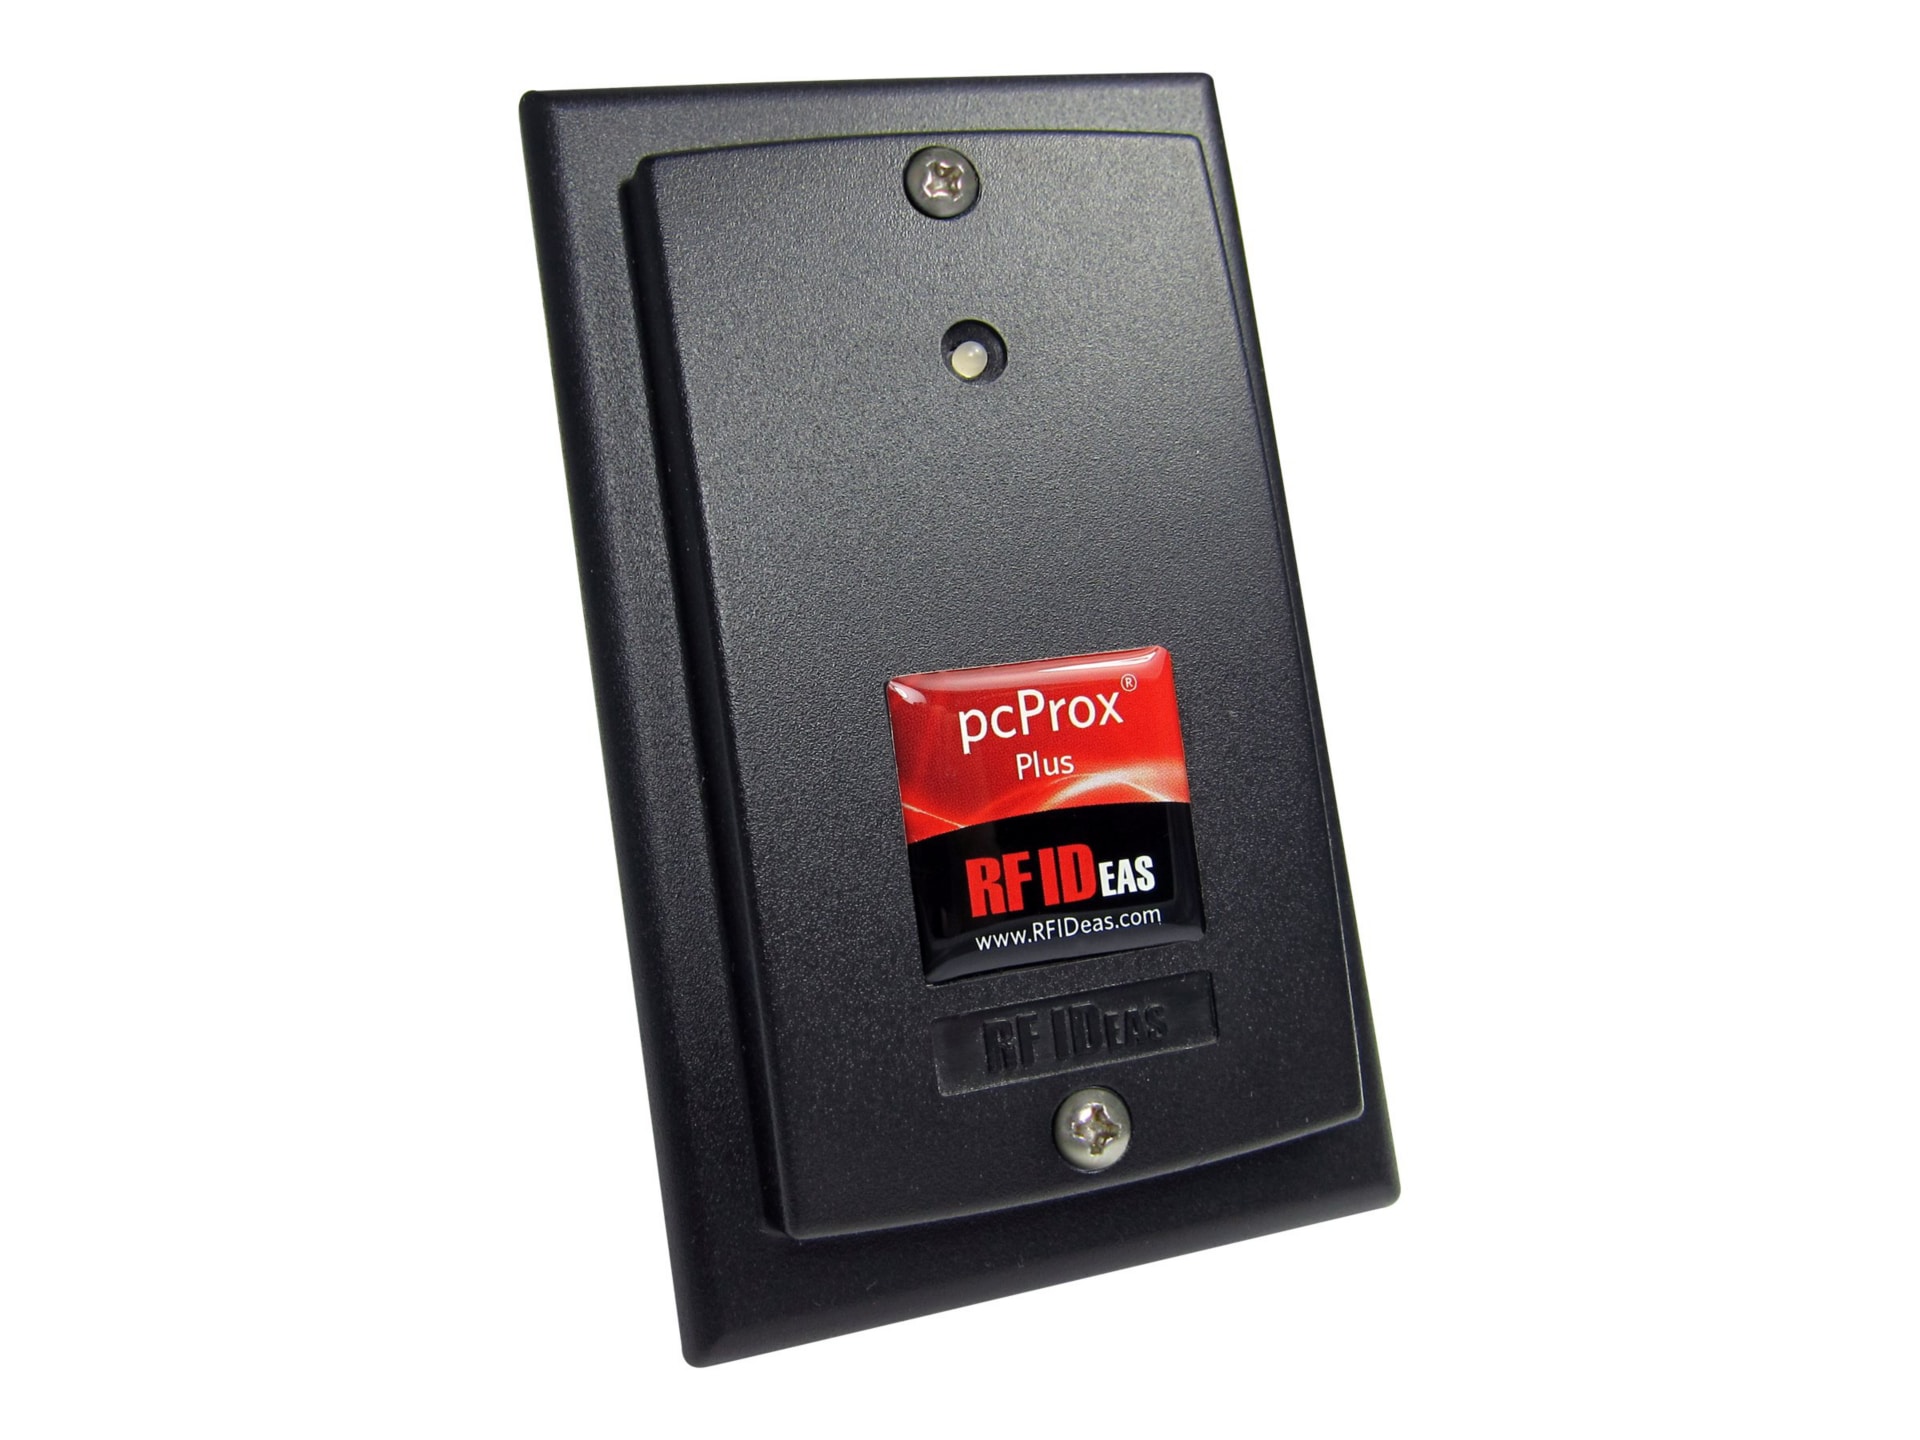 rf IDEAS WAVE ID Plus Keystroke Black Surface Mount Reader - RF proximity reader - USB